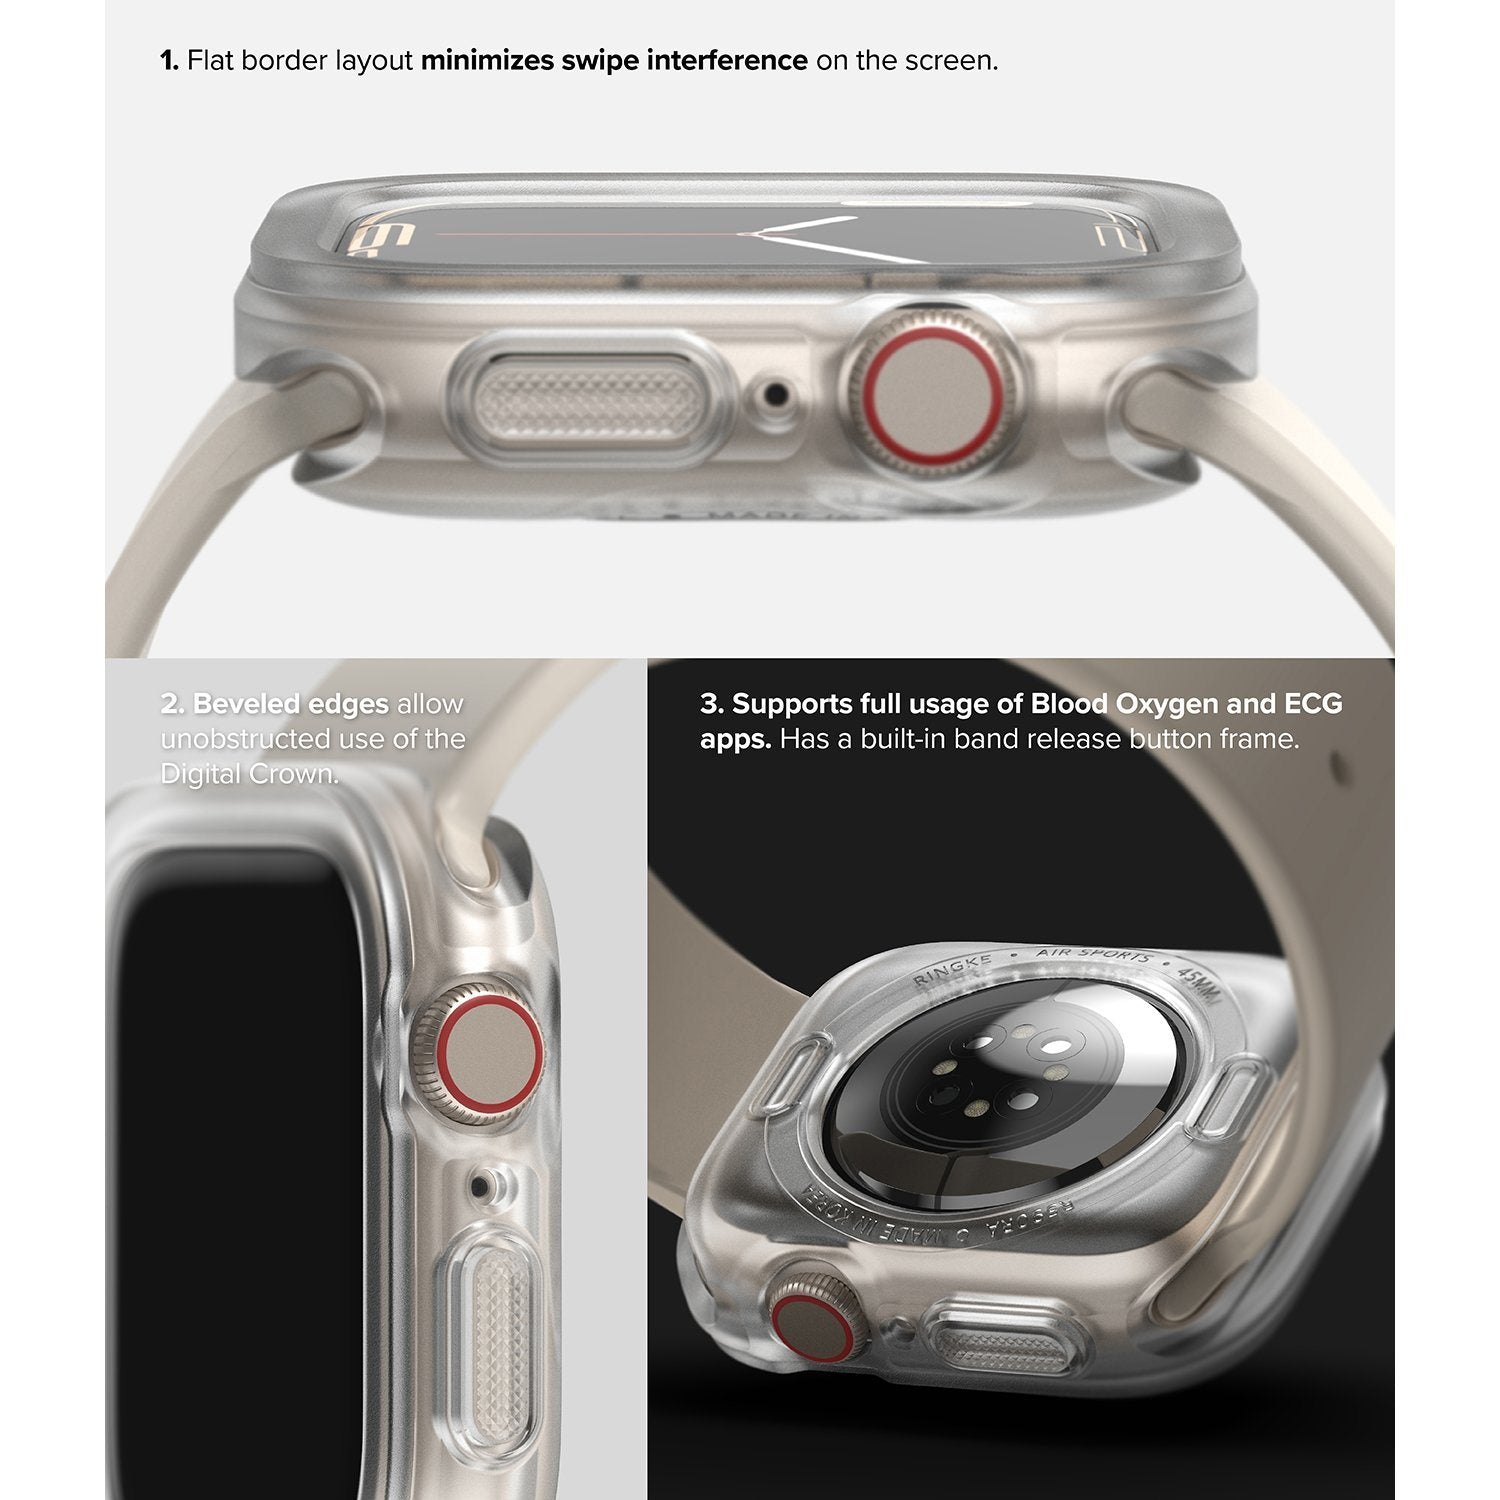 Ringke Air Sports for Apple Watch Series 7 41mm Default Ringke 